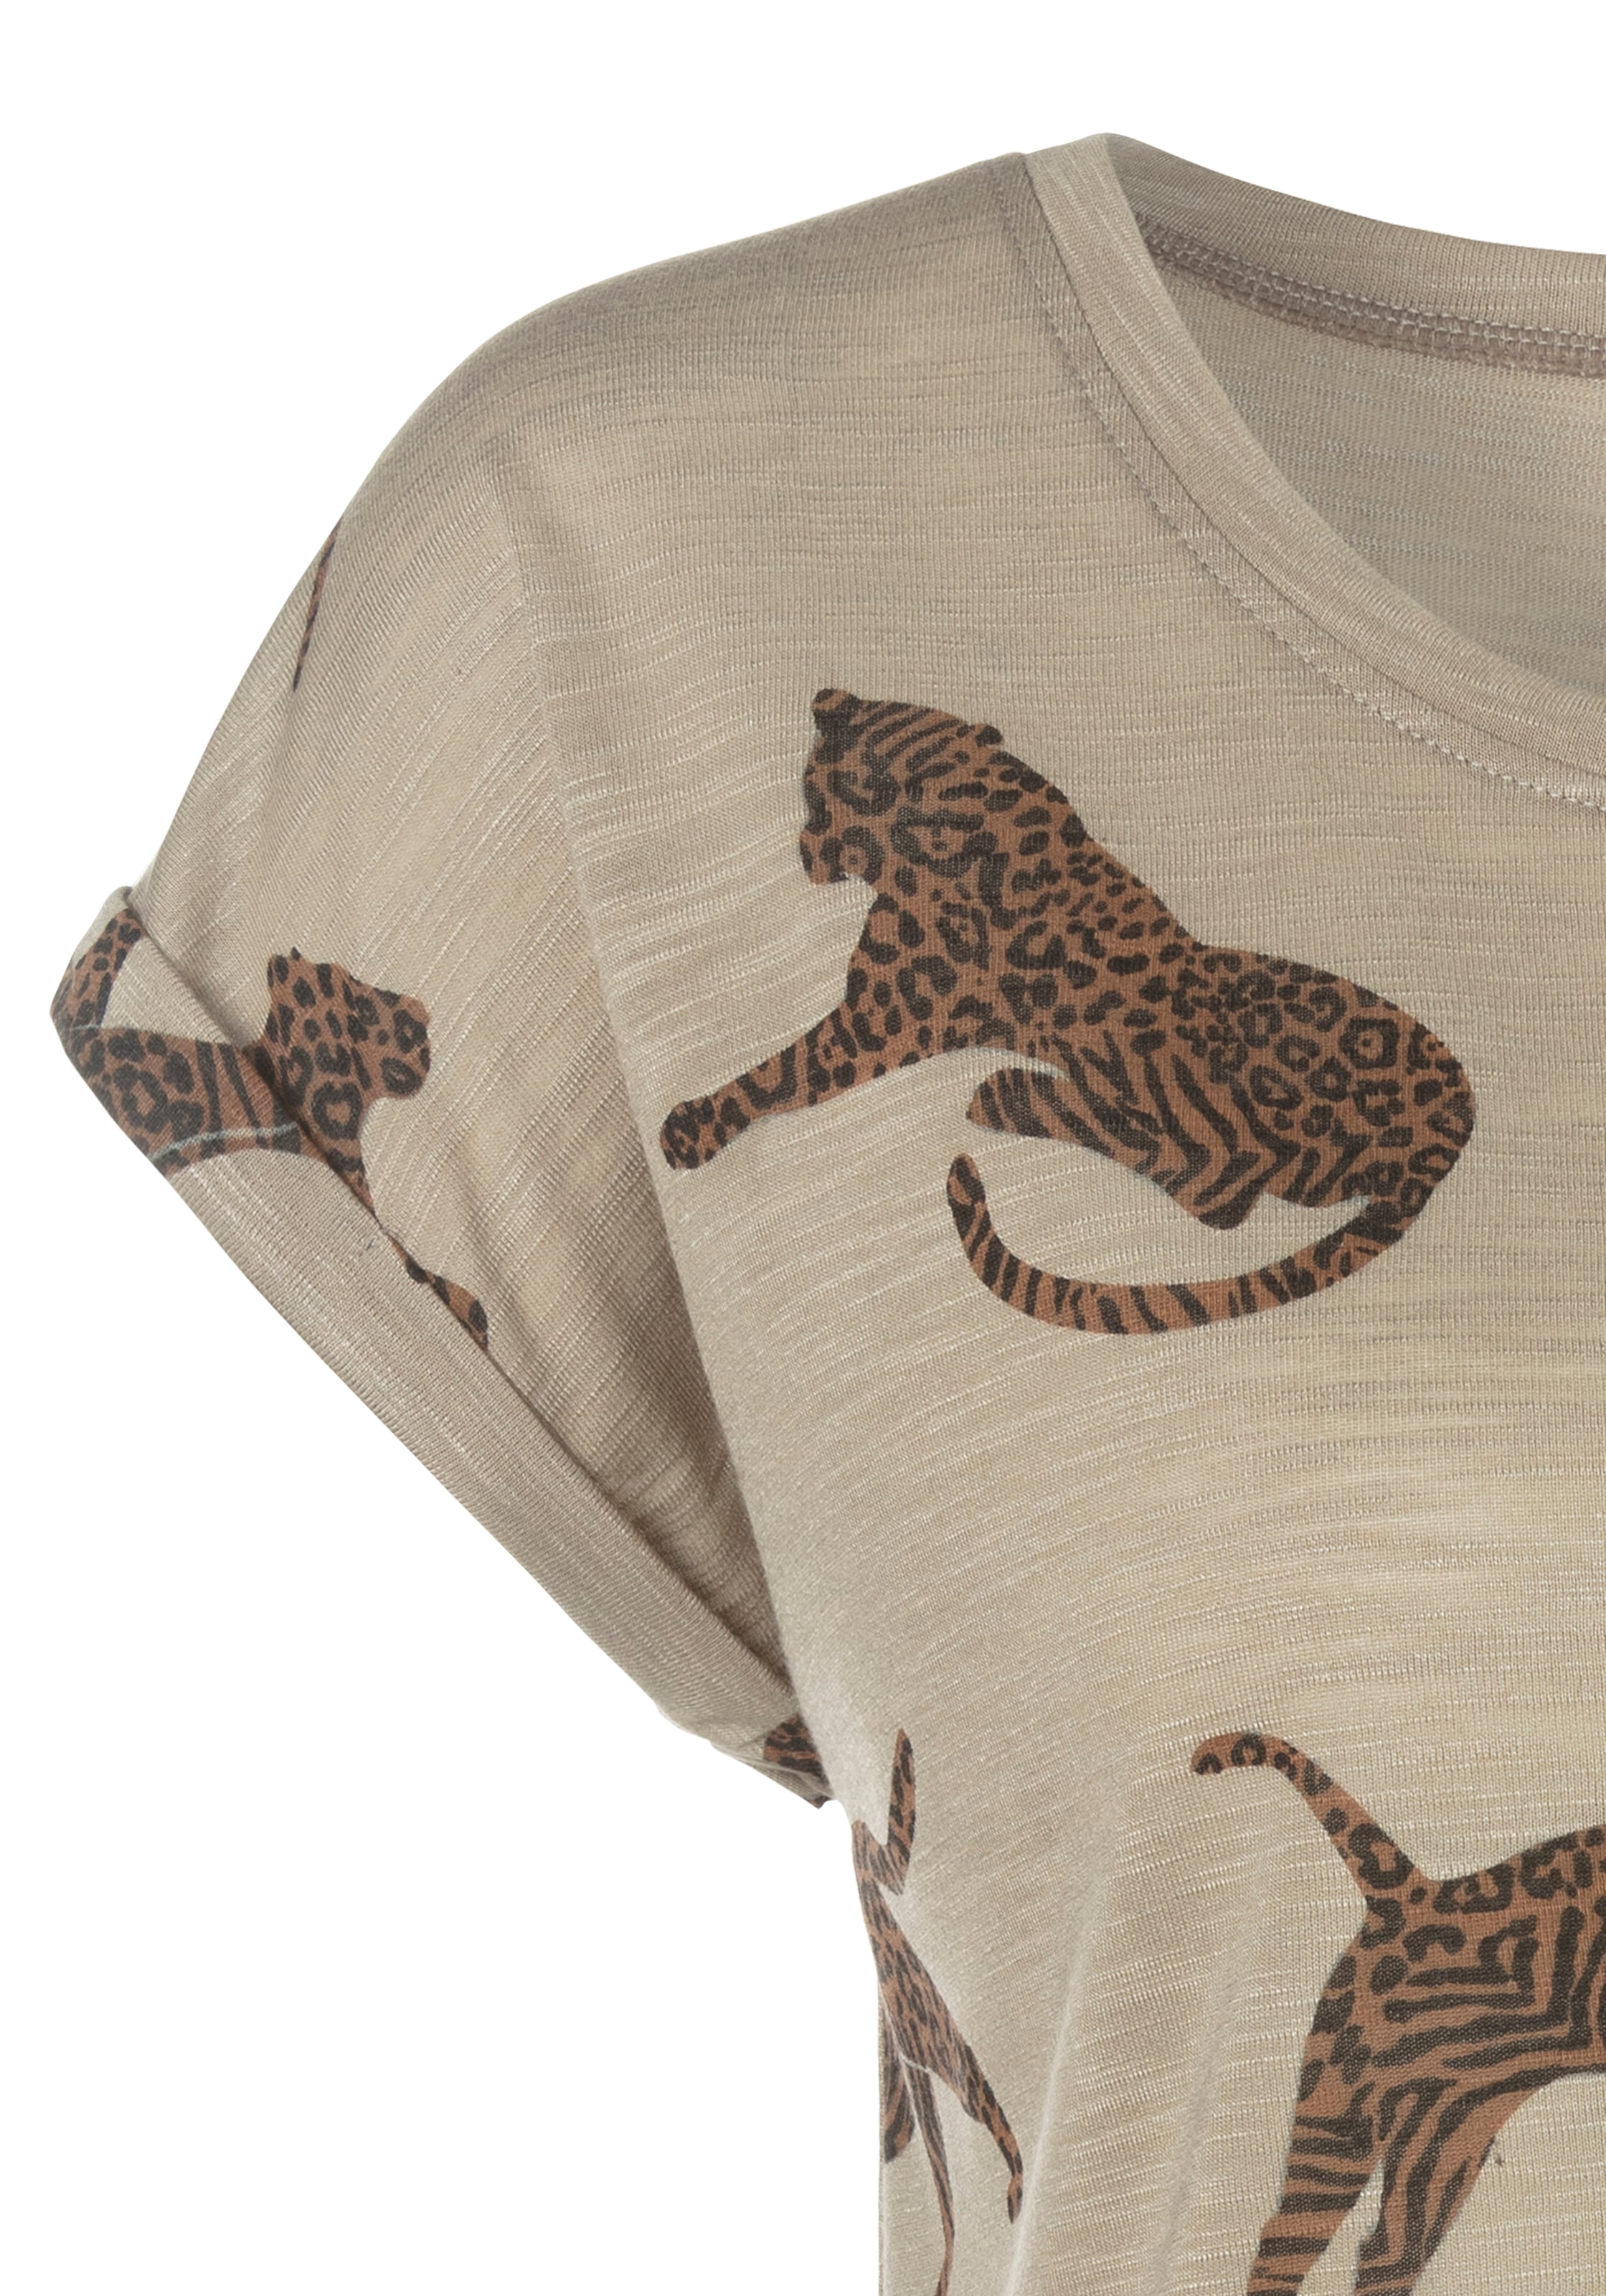 Kurzarmshirt, Leoparden-Motiv, T-Shirt, Damen casual-chic LASCANA mit online bei Passform, lockere